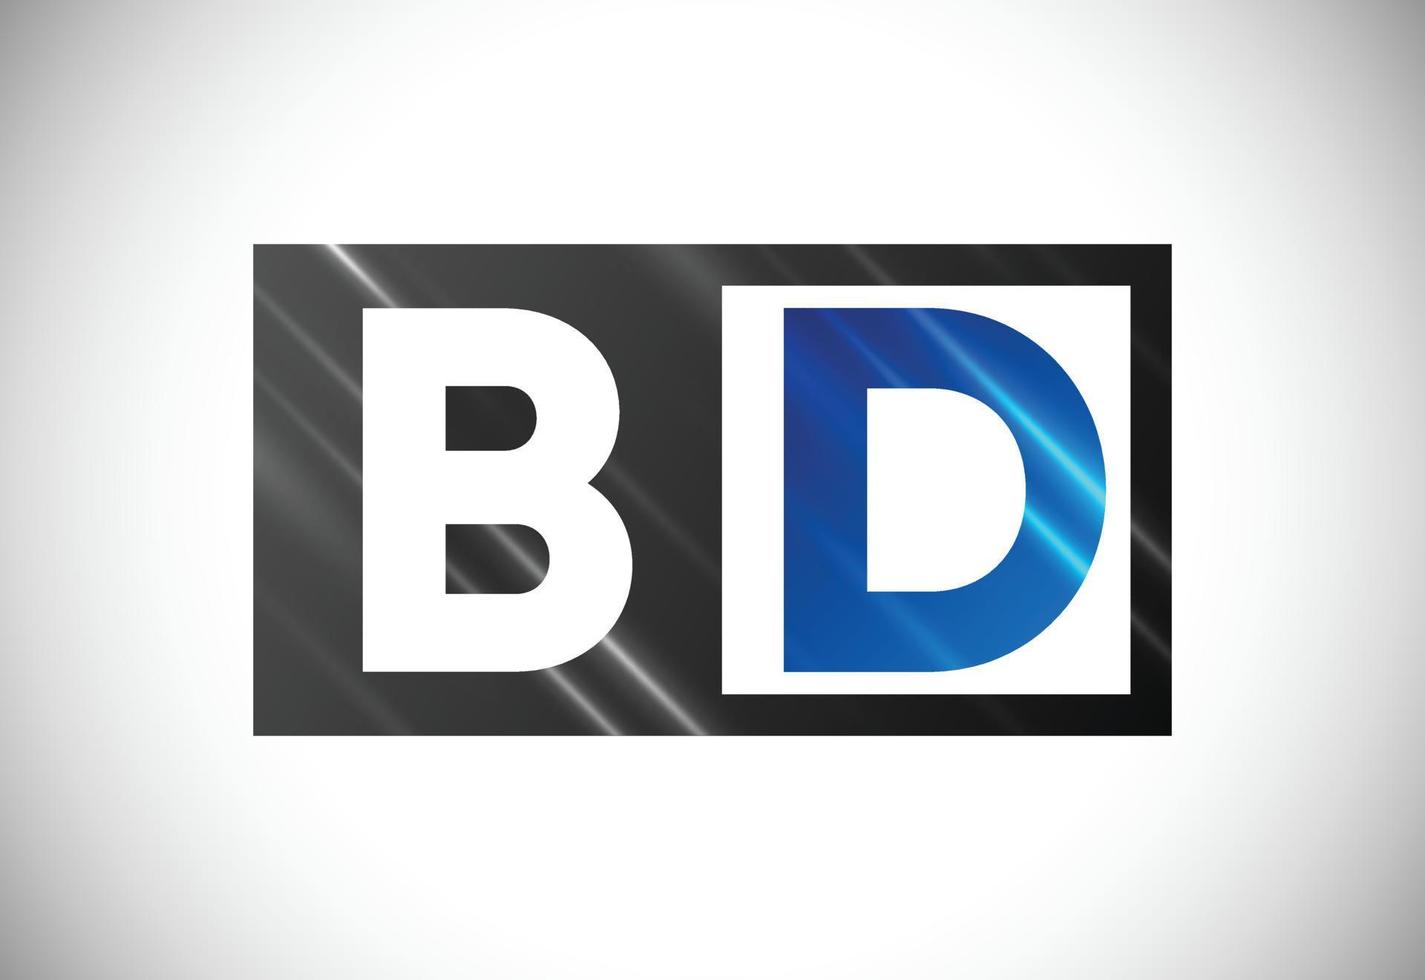 vetor de design de logotipo bd letra inicial. símbolo gráfico do alfabeto para identidade de negócios corporativos